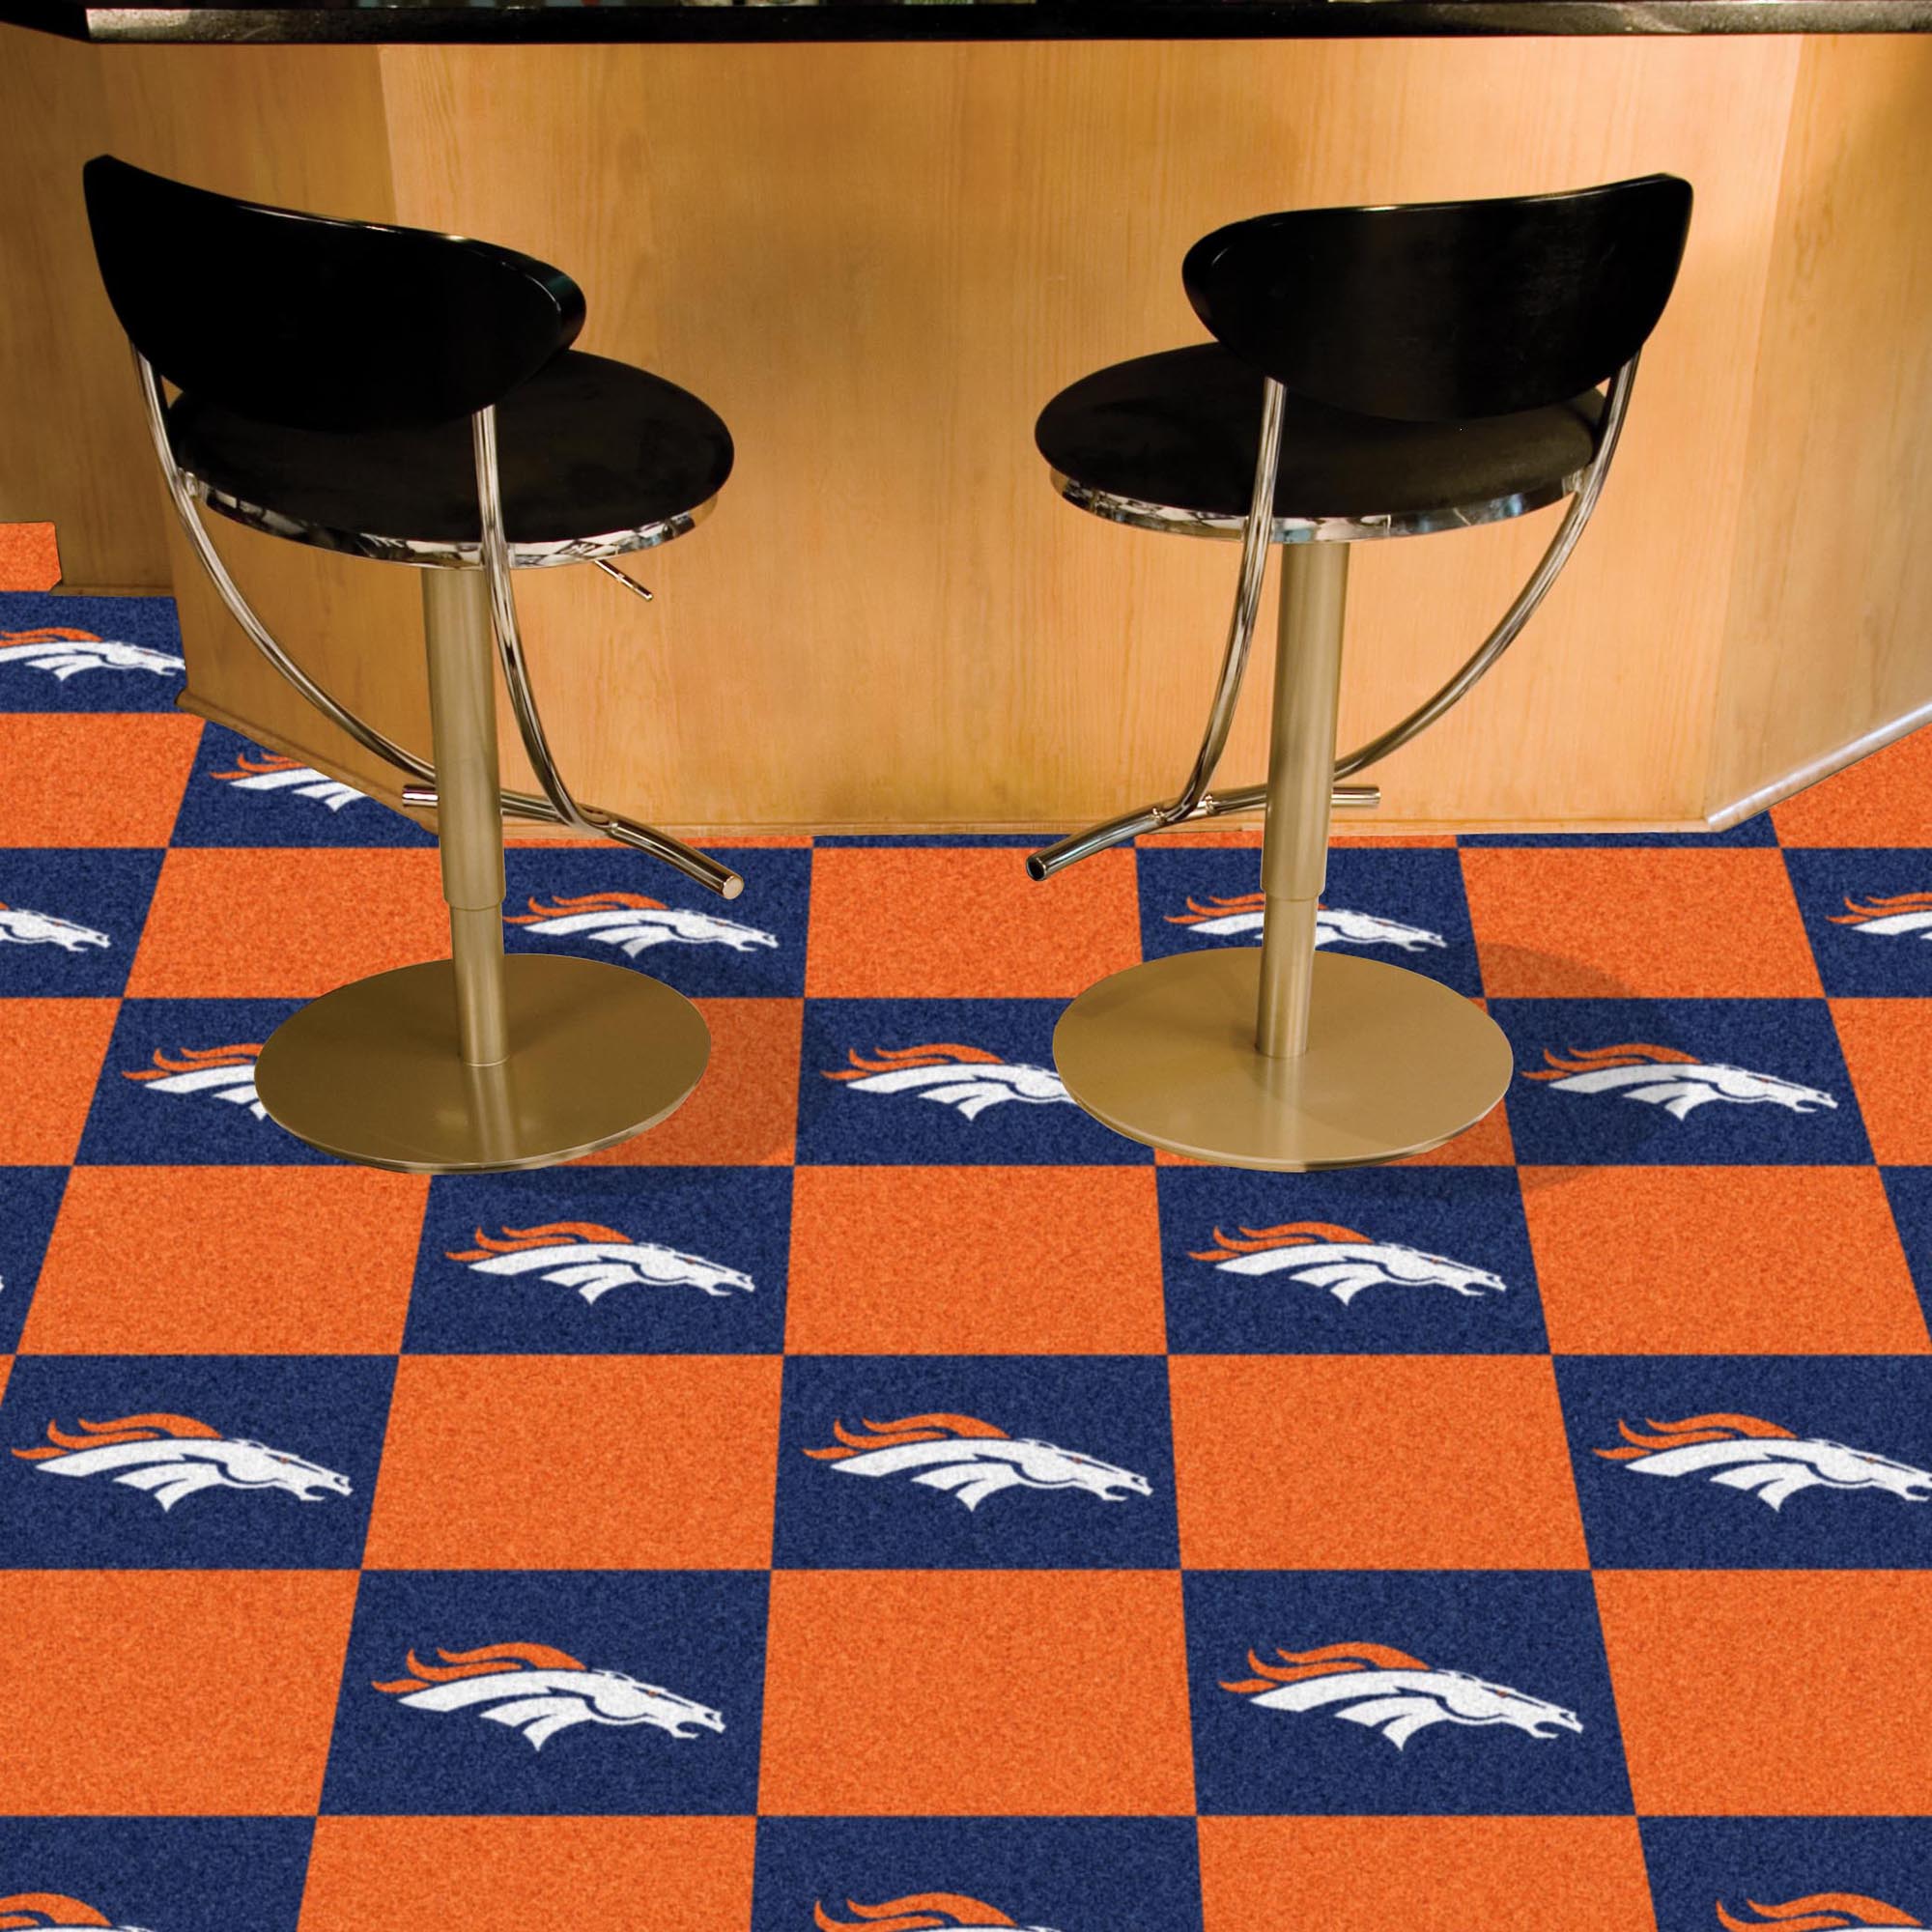 Broncos Team Carpet Tiles - 45 sq ft